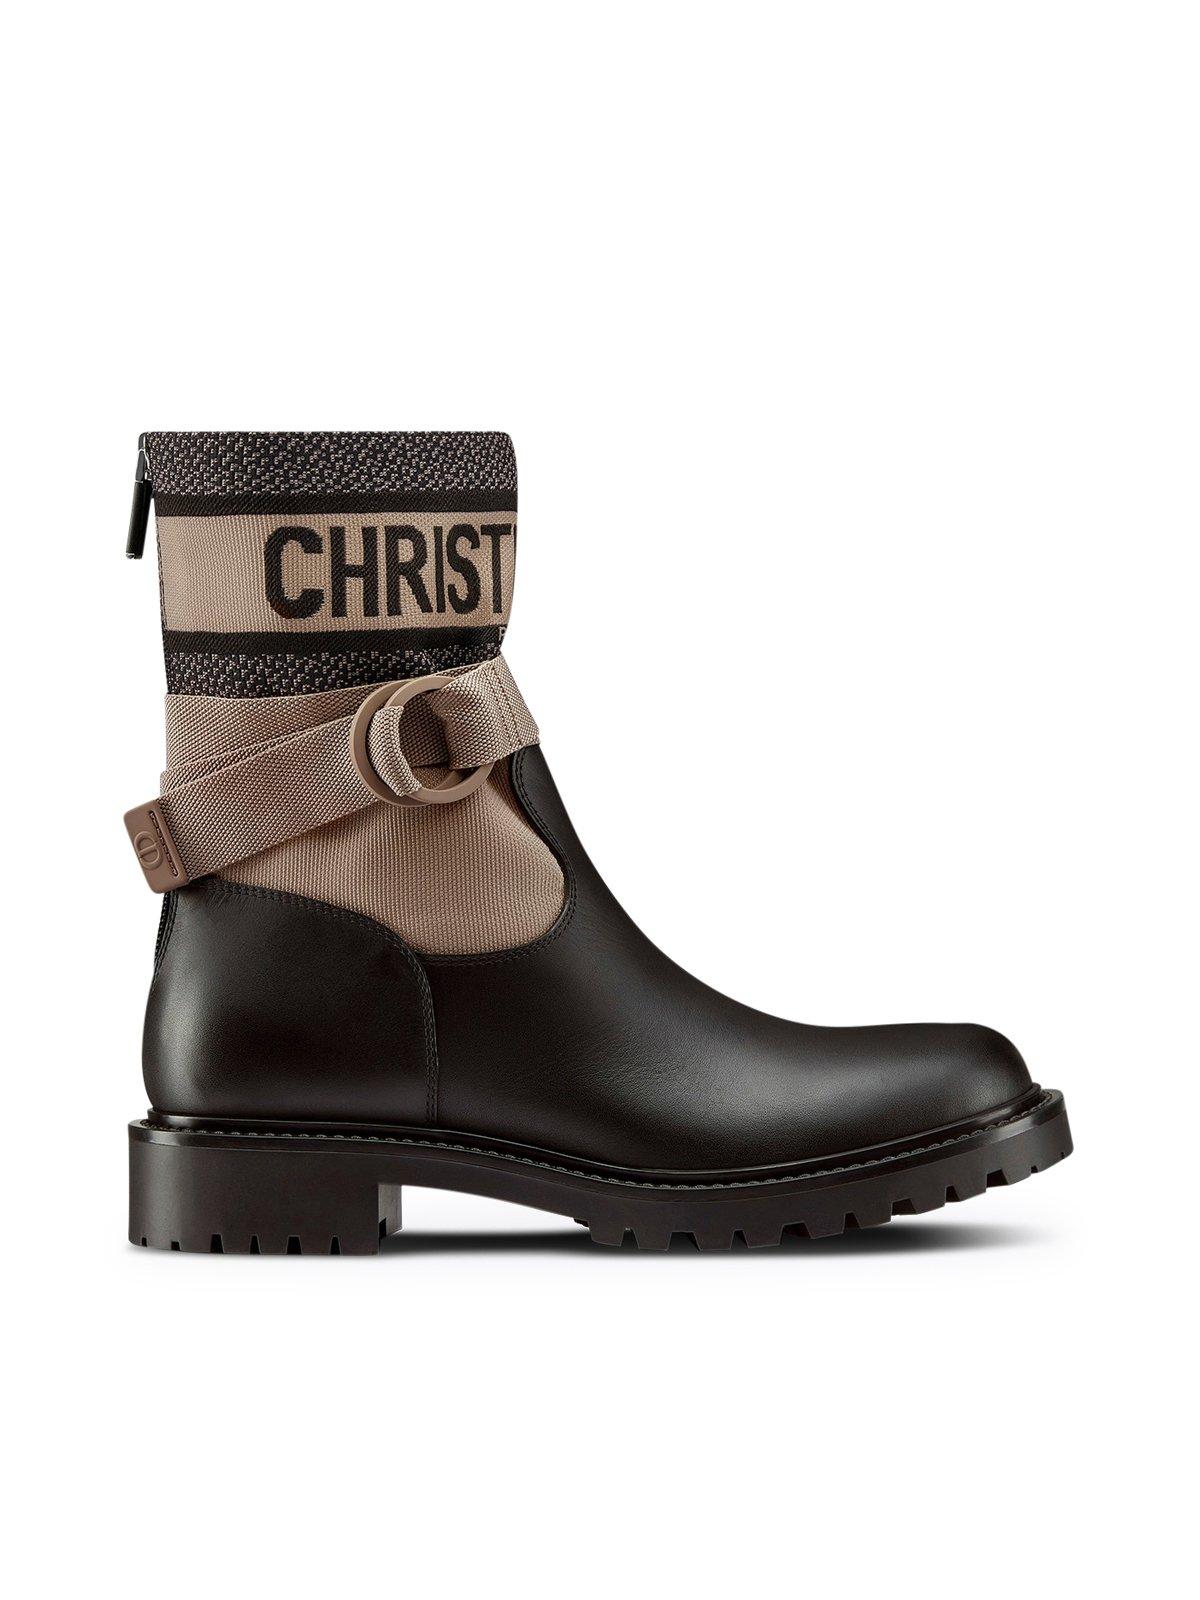 christian dior boot and bag set  Dior boots Christian dior Dior